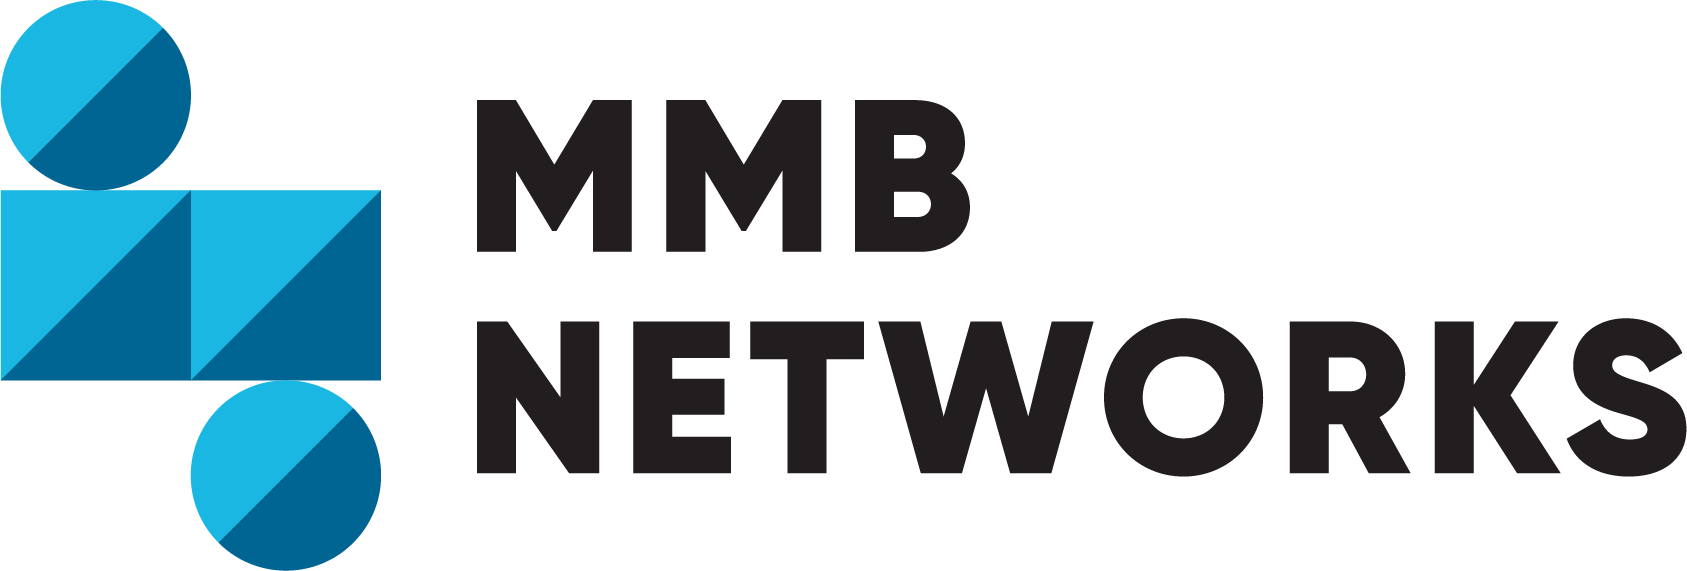 MMB Networks LOGO